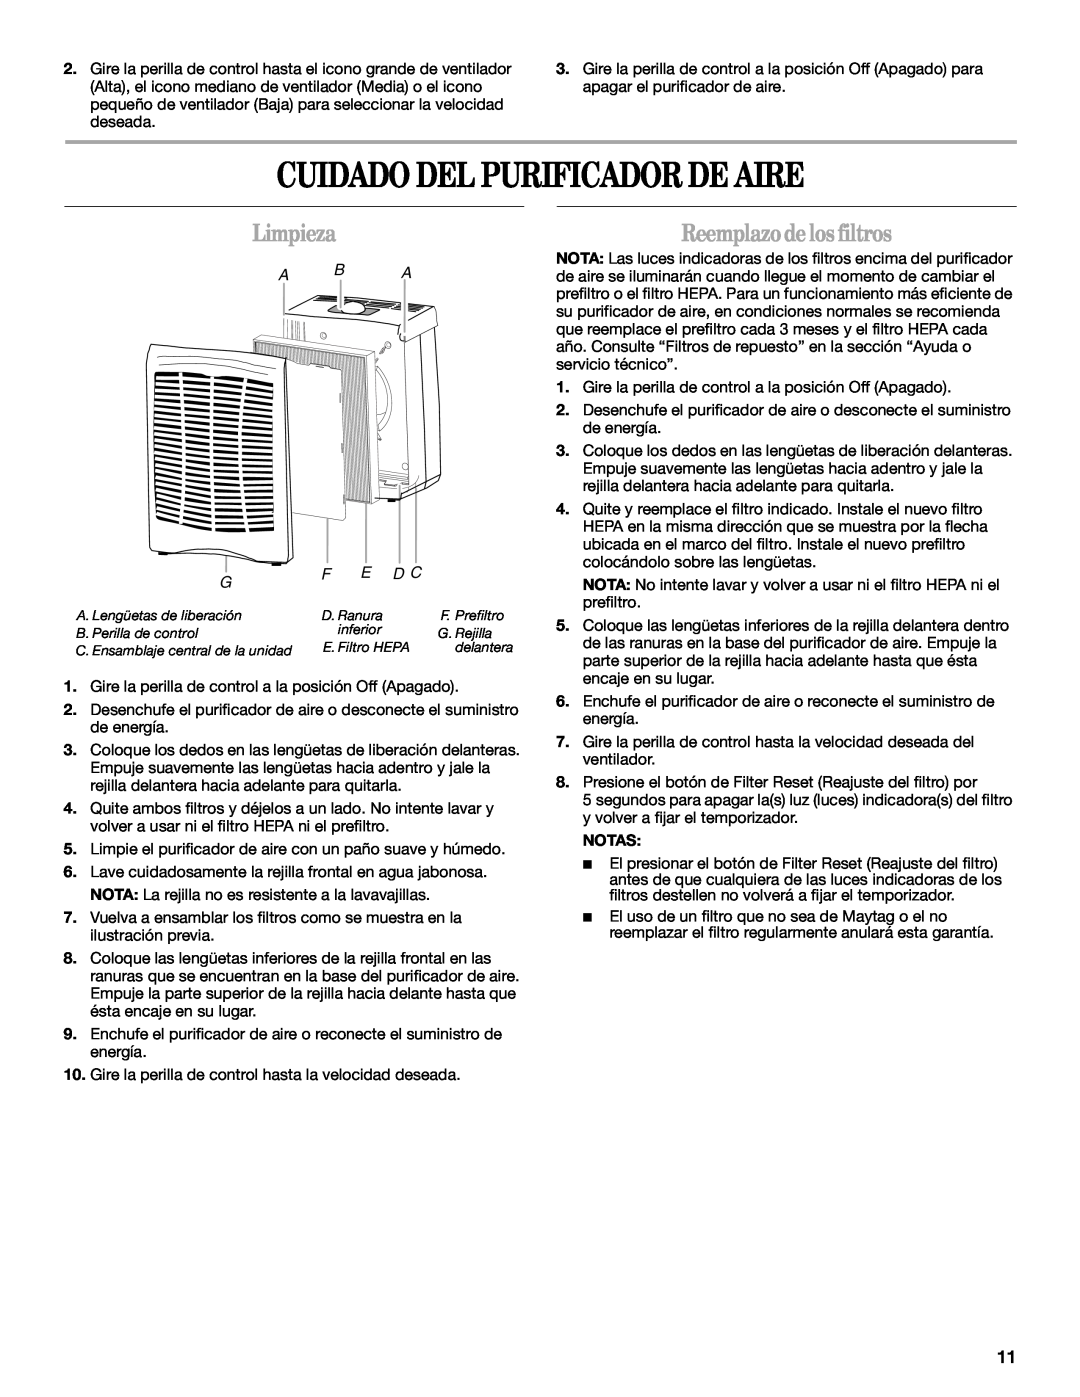 Maytag MT-AP250450 manual Cuidado Del Purificador De Aire, Limpieza, Reemplazo de los filtros, E D C, A B A 